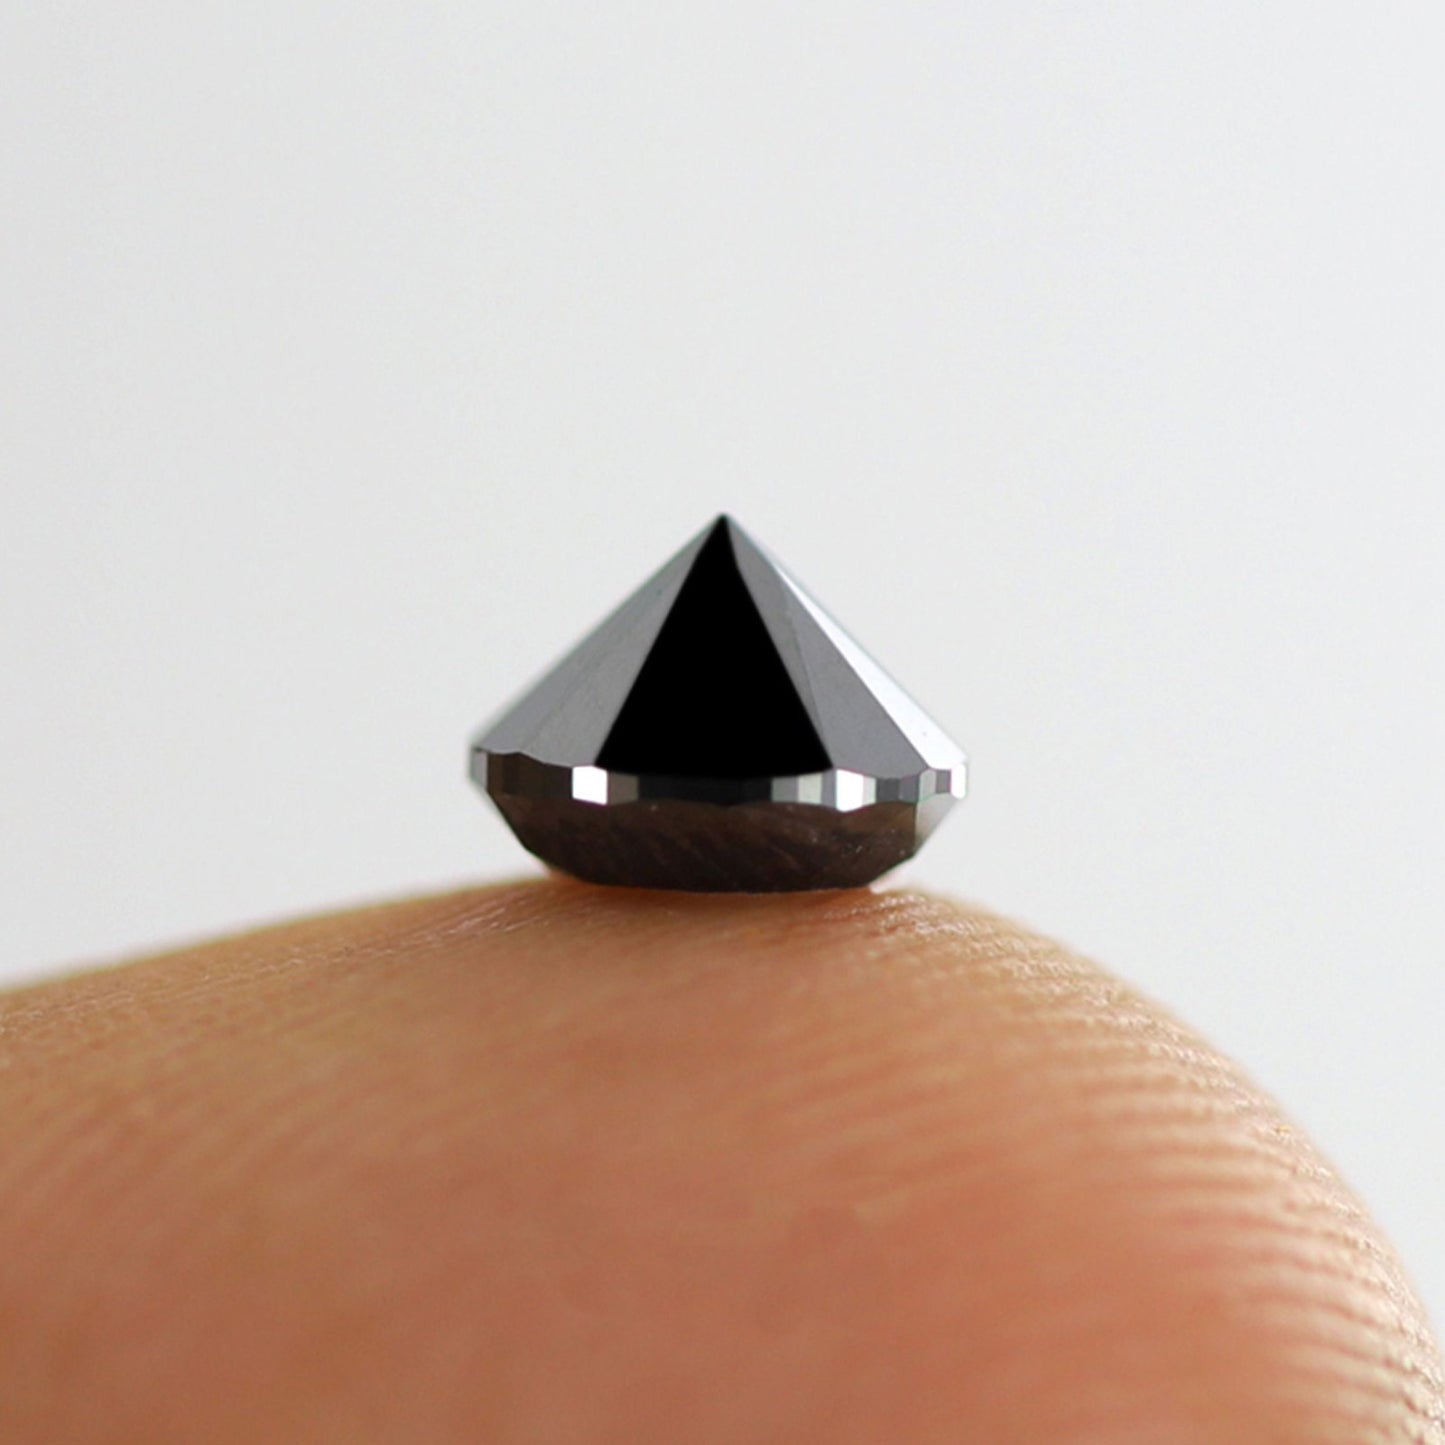 1.15 Carat Loose Natural Oval Cut Diamond Best AAA Quality Full Brilliant Cut Black Diamond Engagement Rings - Blackdiamond